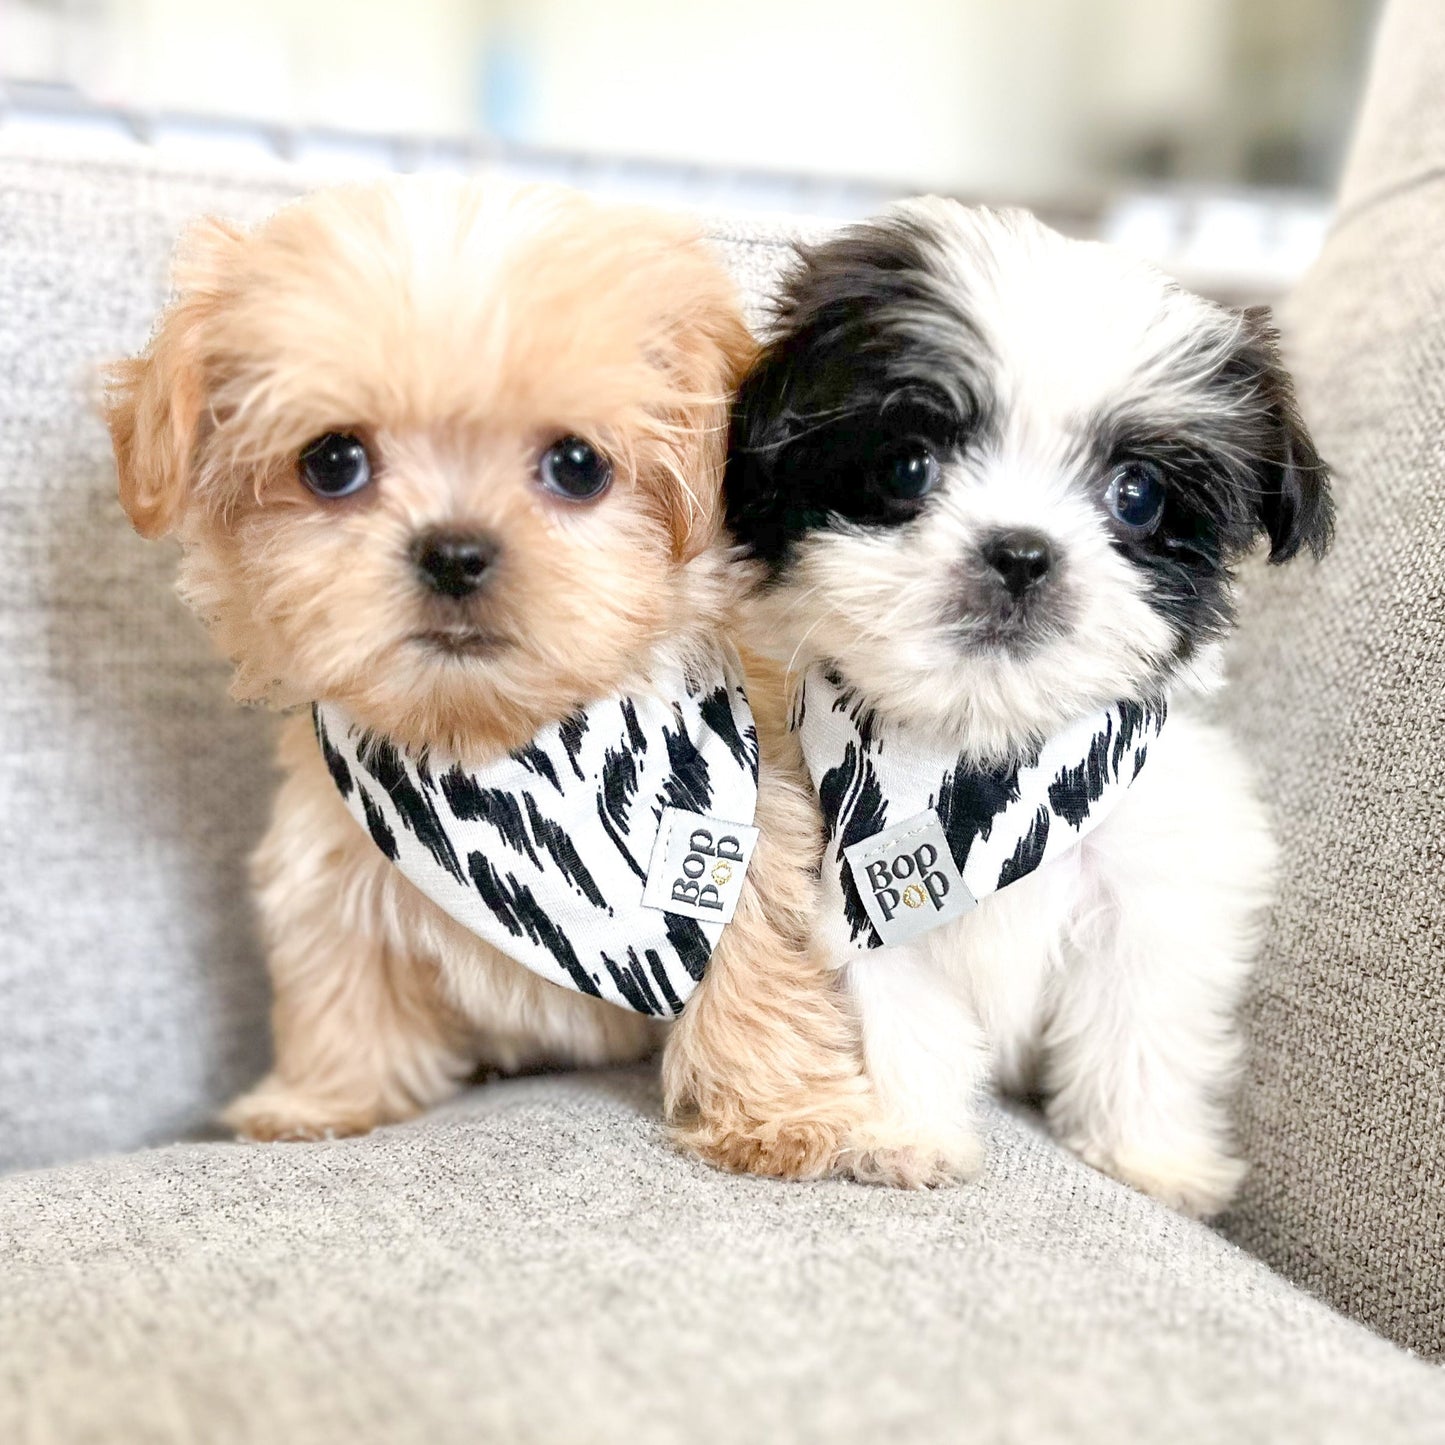 Bop Pop Pets Dream Weave iKat bandana cozy non-iron black white pet accessory Puppy custom bandana XXS